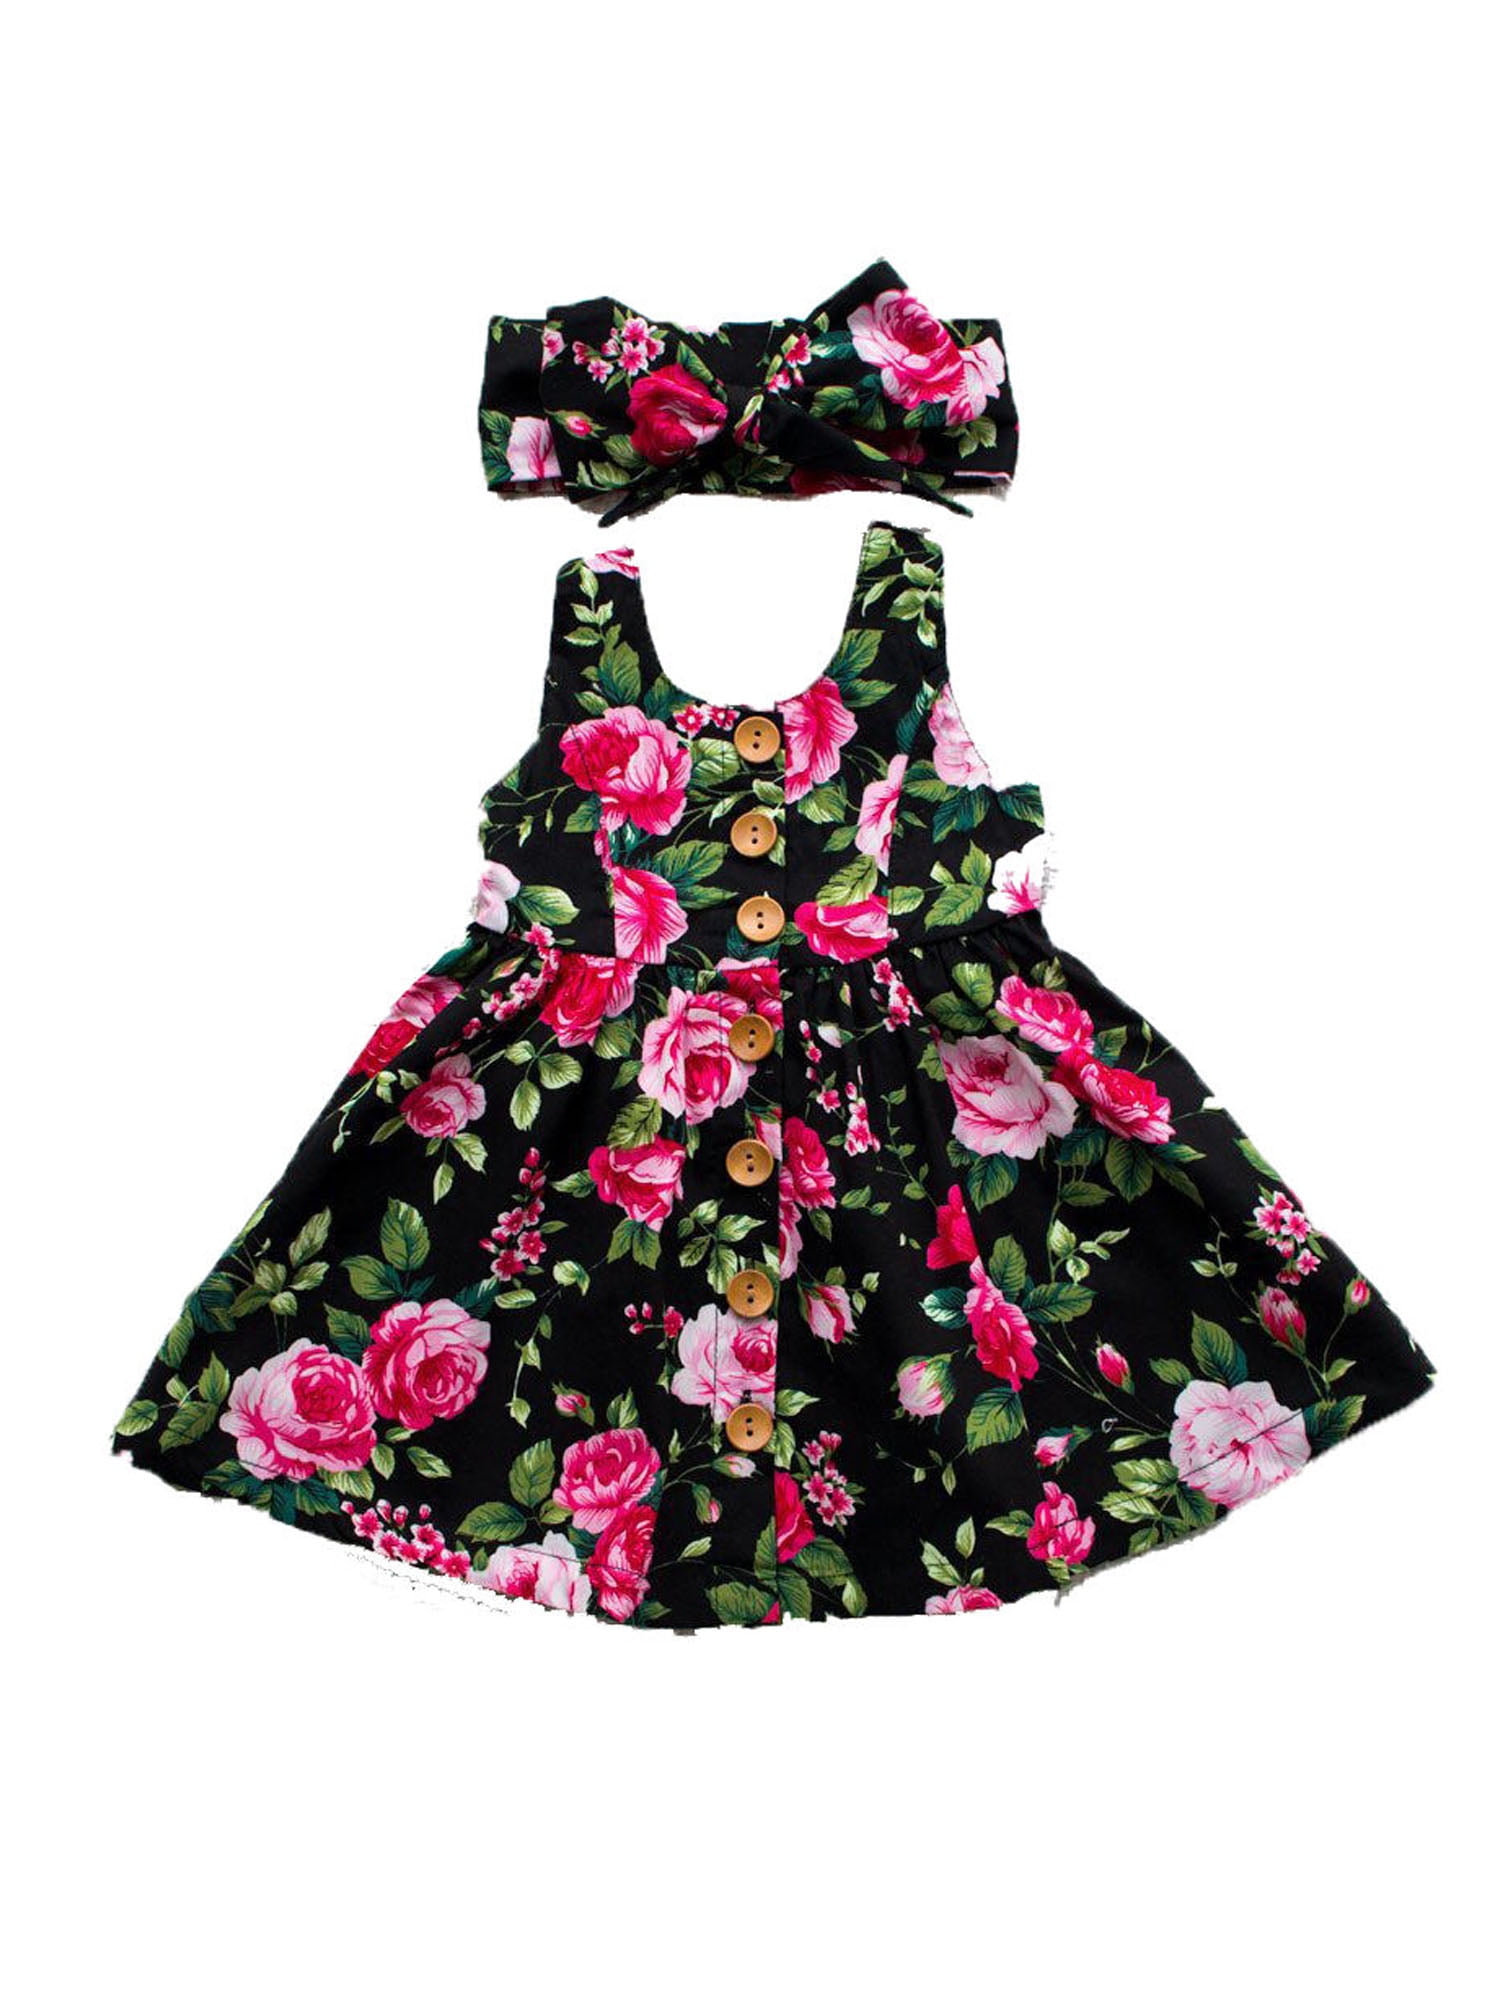 Dghisre Baby Girls Summer Floral Print Dress Toddler Princess Sleeveless Strap Beach Sundress